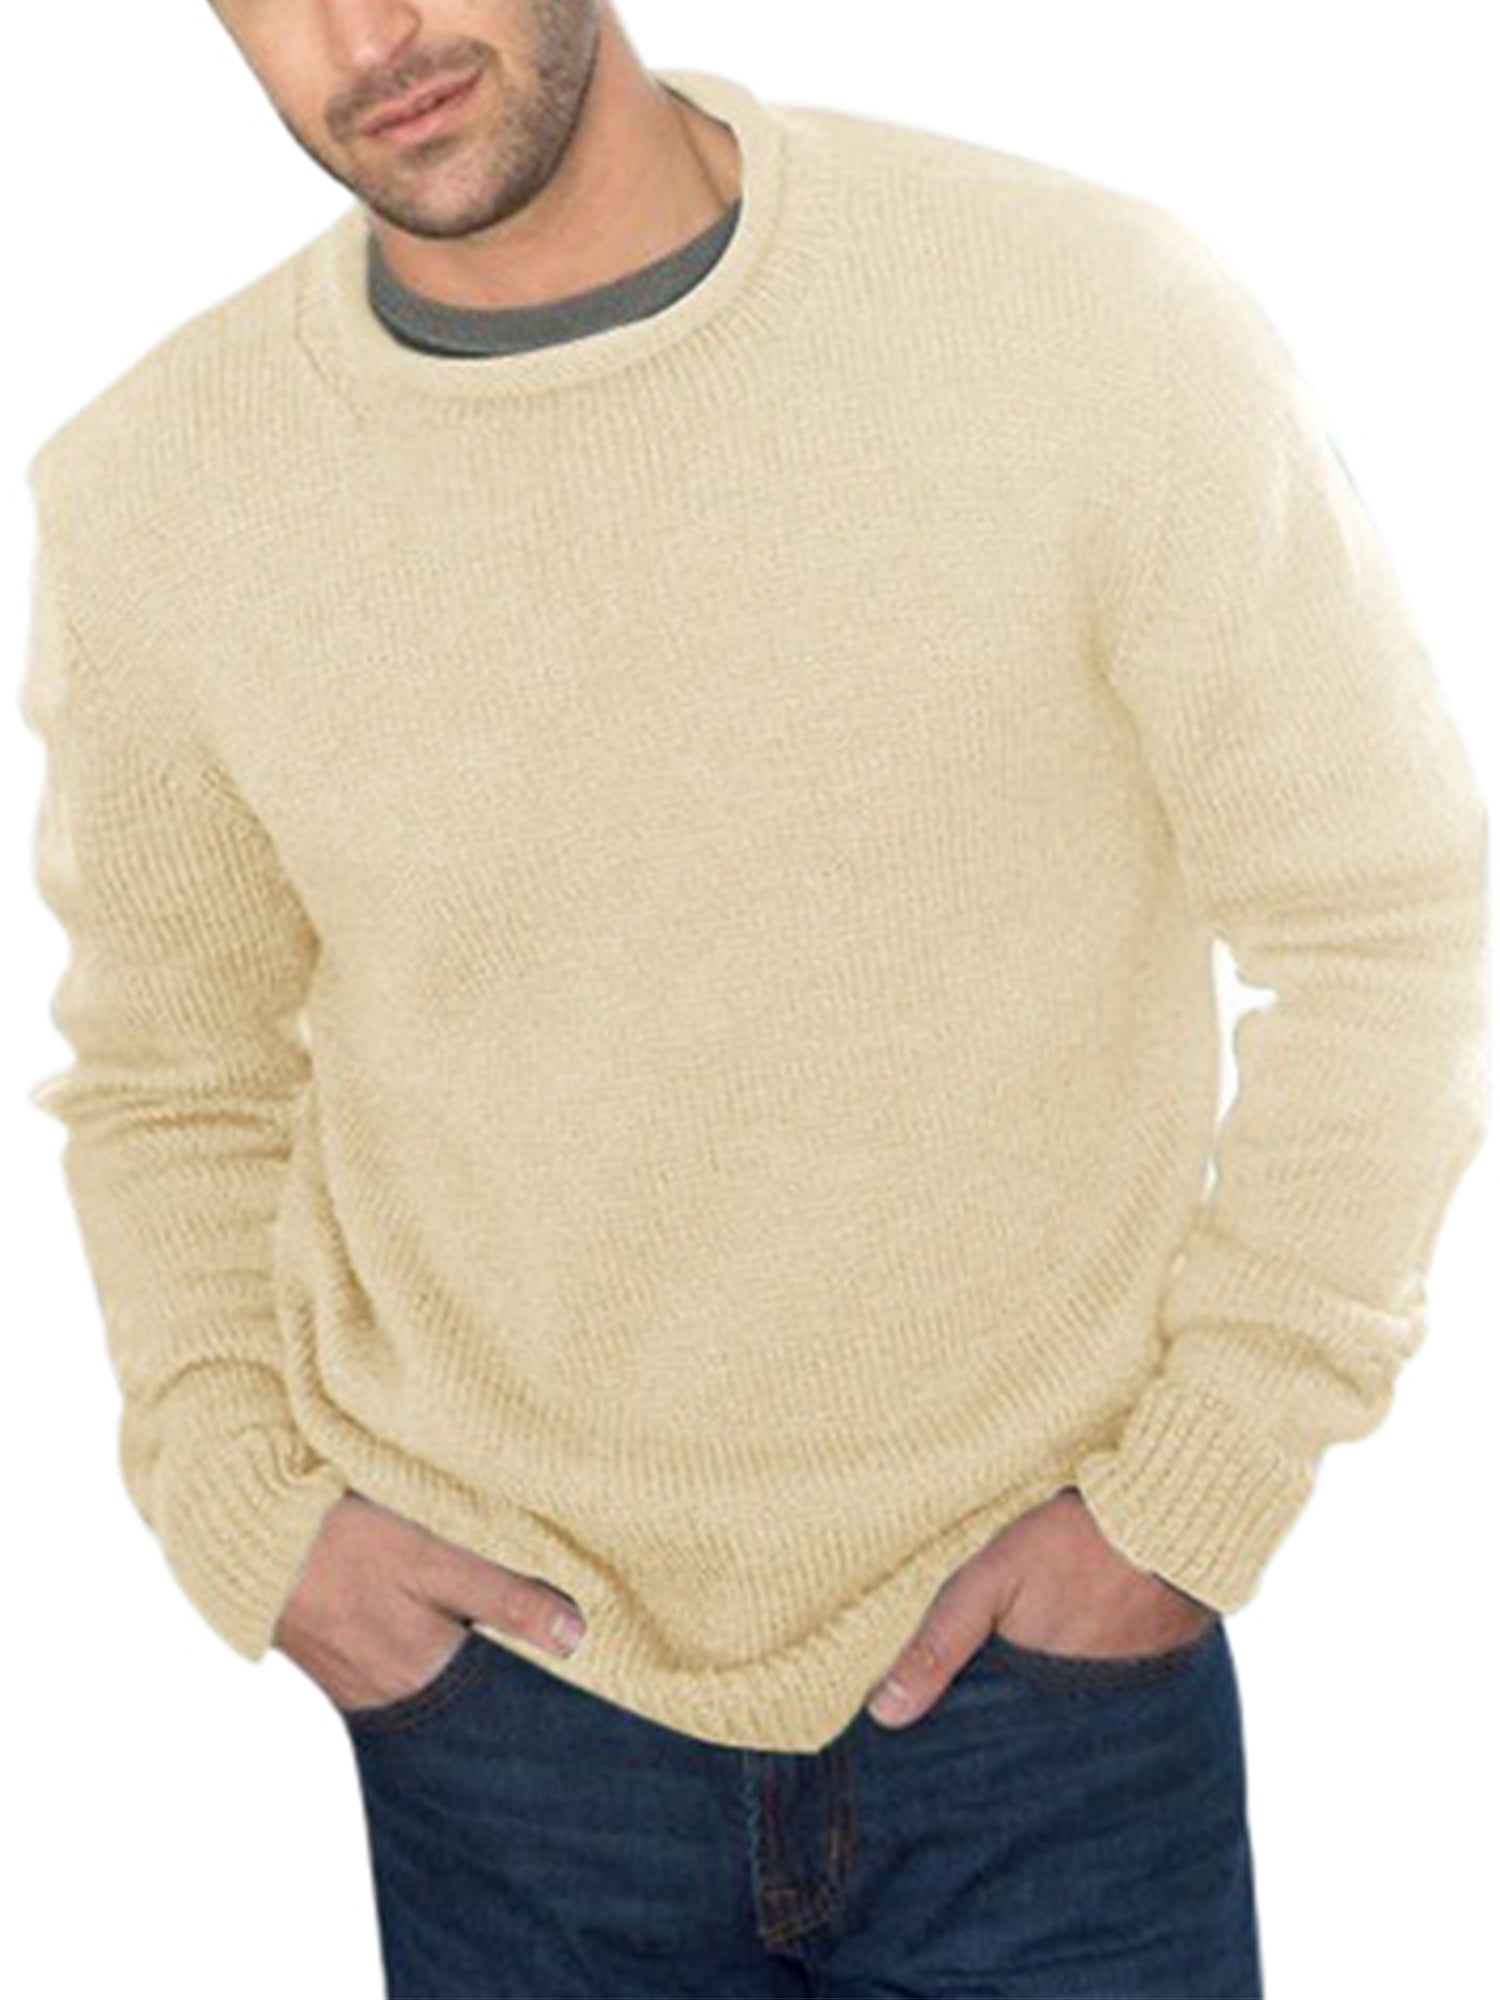 Men Knitted Sweater T-Shirts Plain Top Jumper Autumn Winter Long Sleeve Casual Tops Blouse Sweatshirts